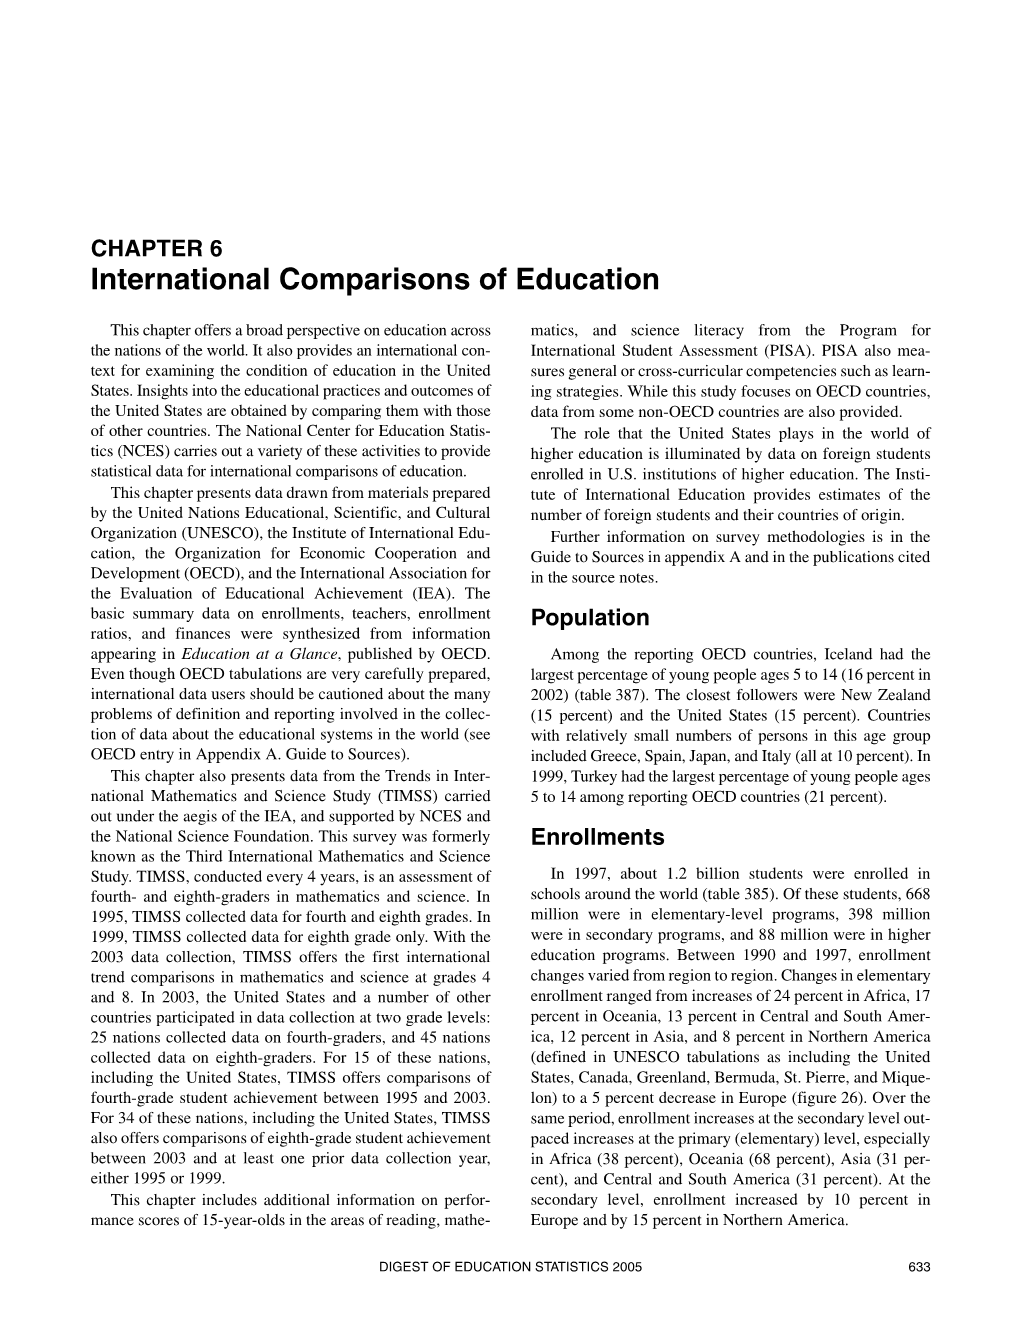 Digest of Education Statistics, 2005